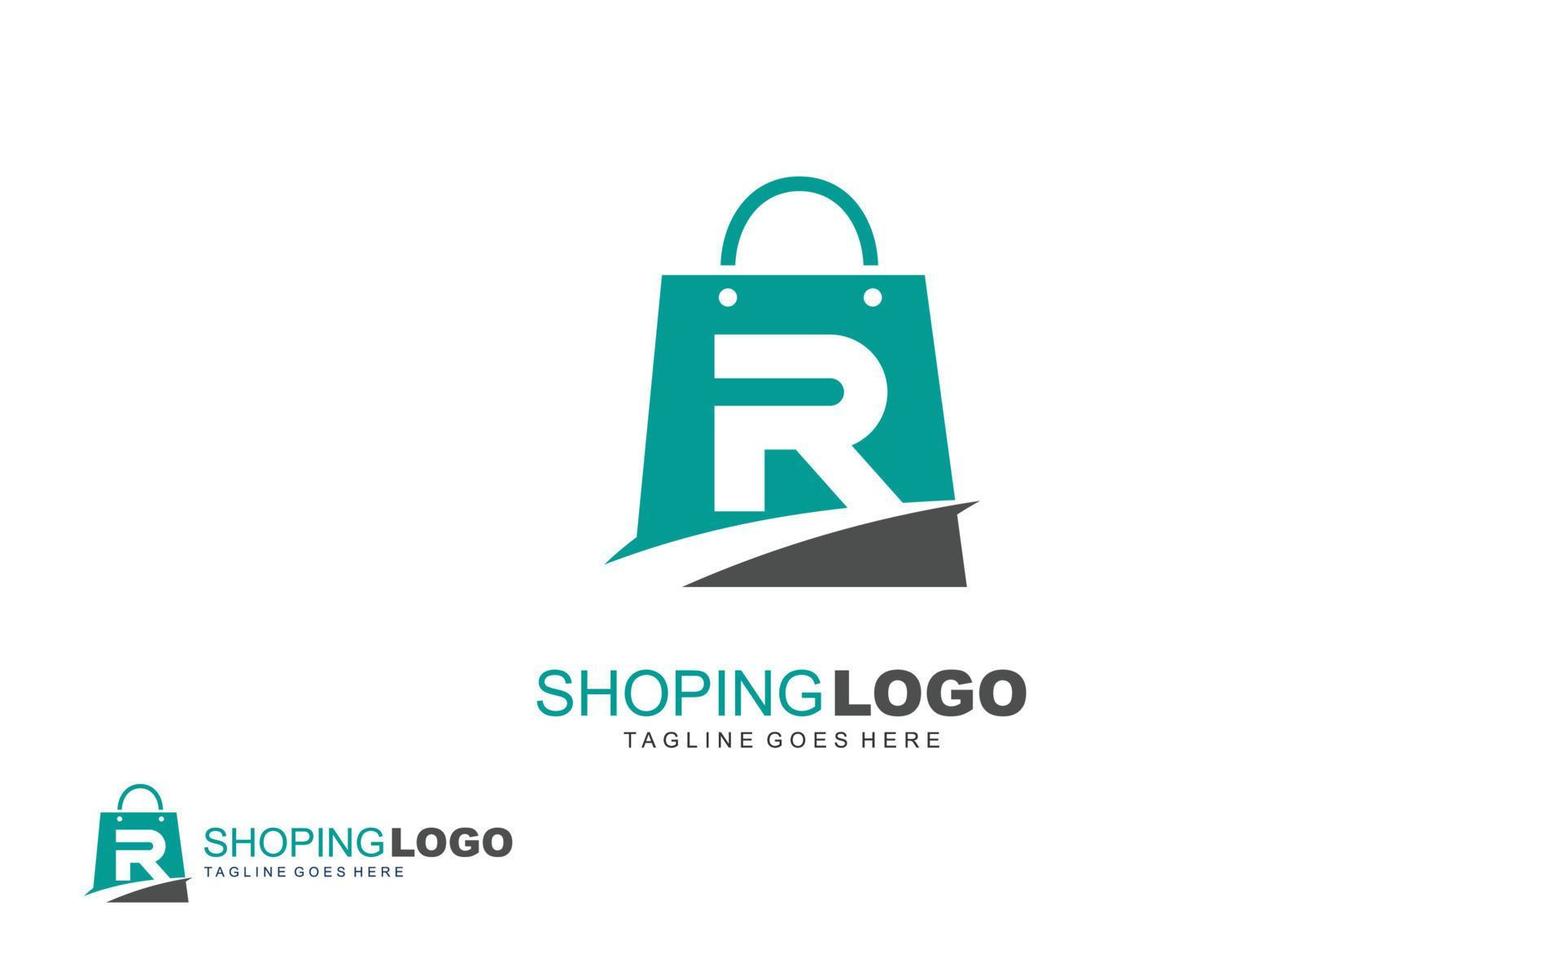 R logo ONLINESHOP for branding company. BAG template vector illustration for your brand.